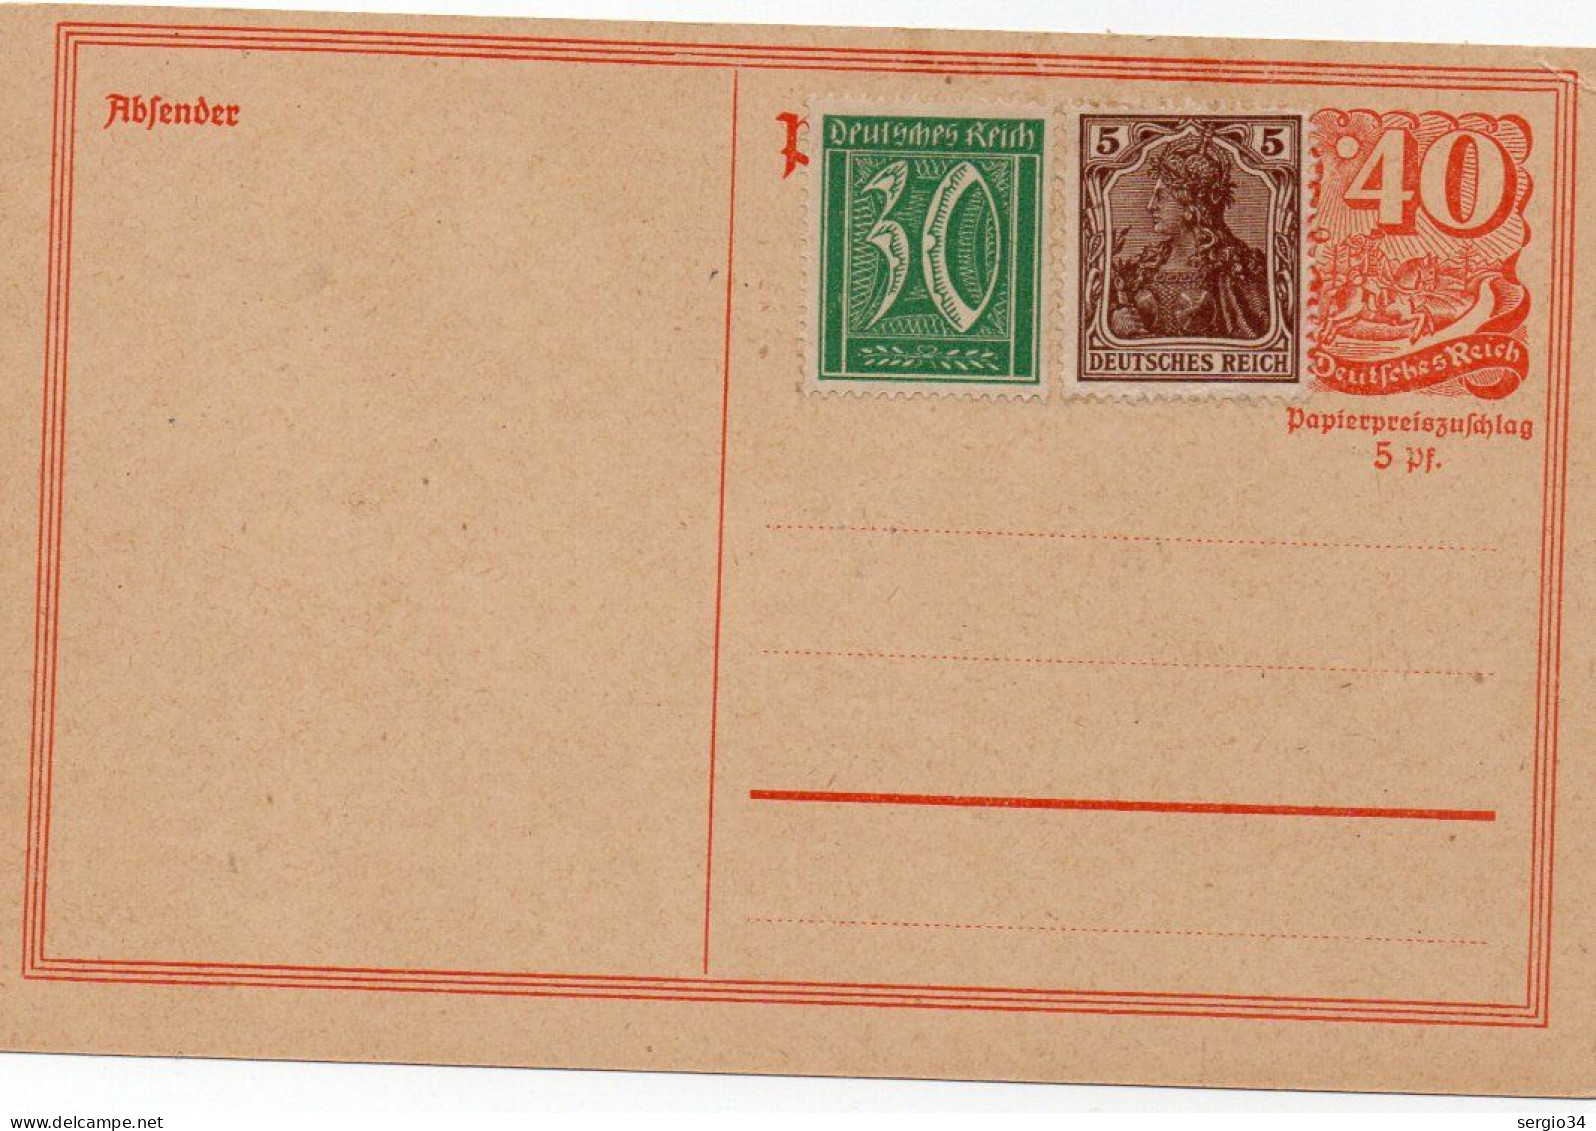 GERMANIA-Intero Postale Nuovo Pluriaffrancato Come Da Foto- - 1843-1852 Kantonalmarken Und Bundesmarken